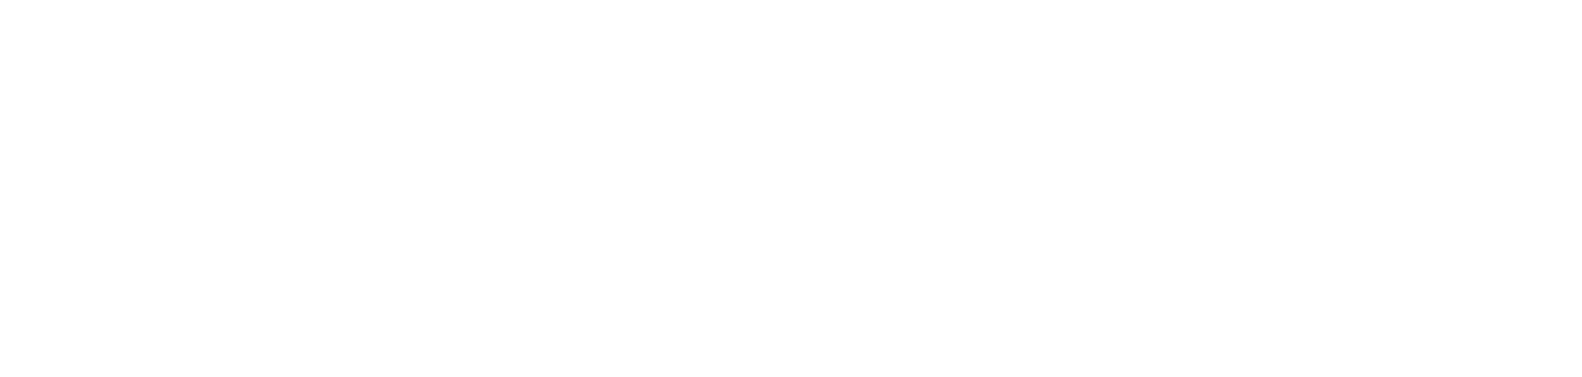 DMG Mori logo pour fonds sombres (PNG transparent)